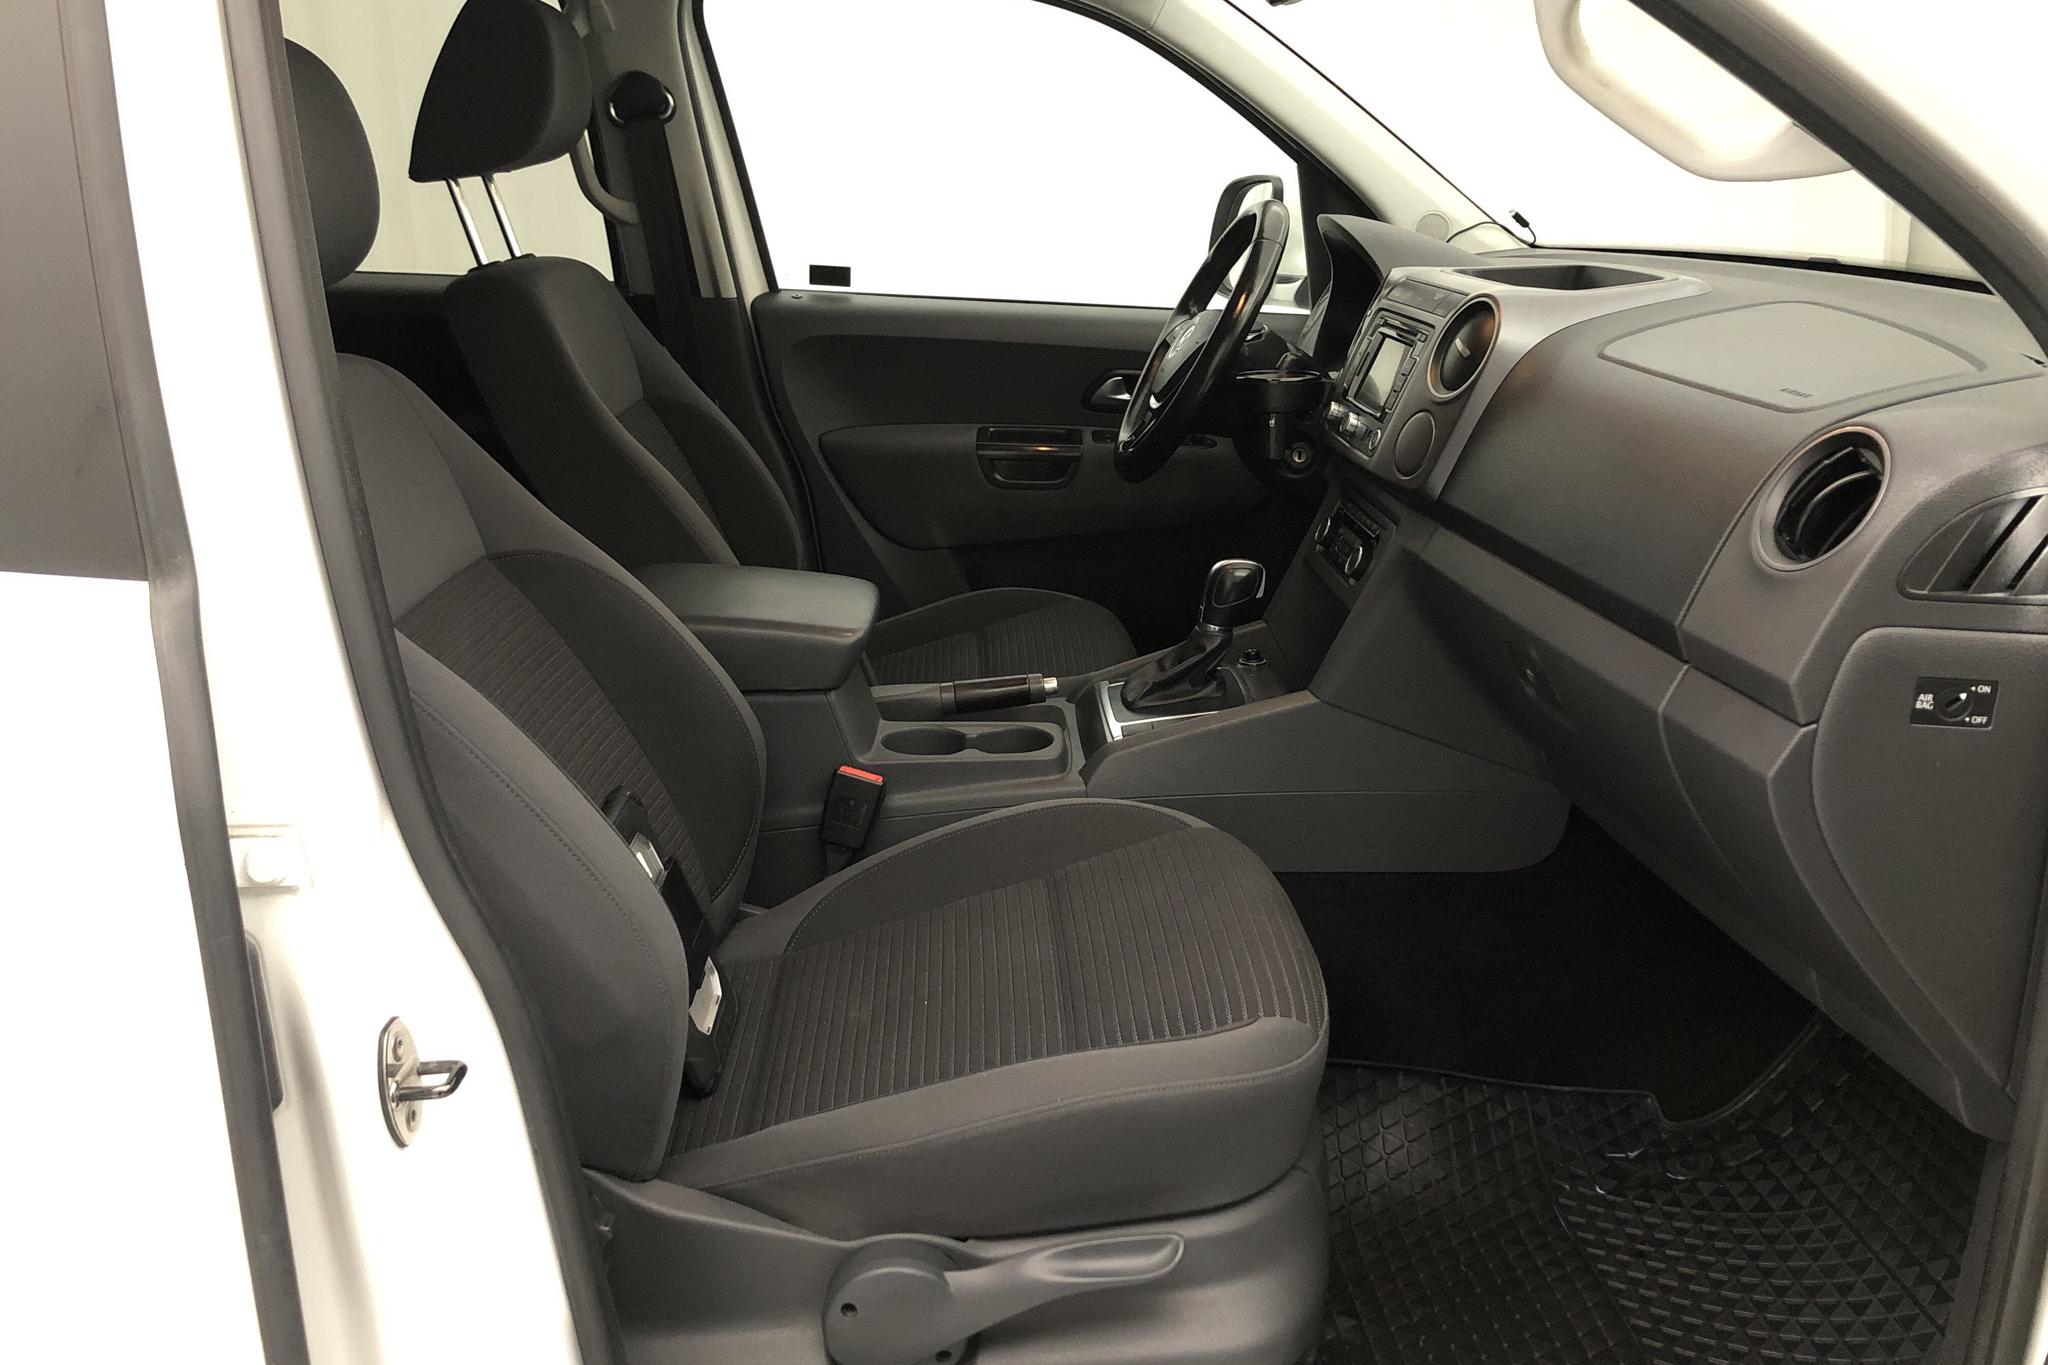 VW Amarok 2.0 TDI 4motion (180hk) - 79 930 km - Automatic - white - 2015